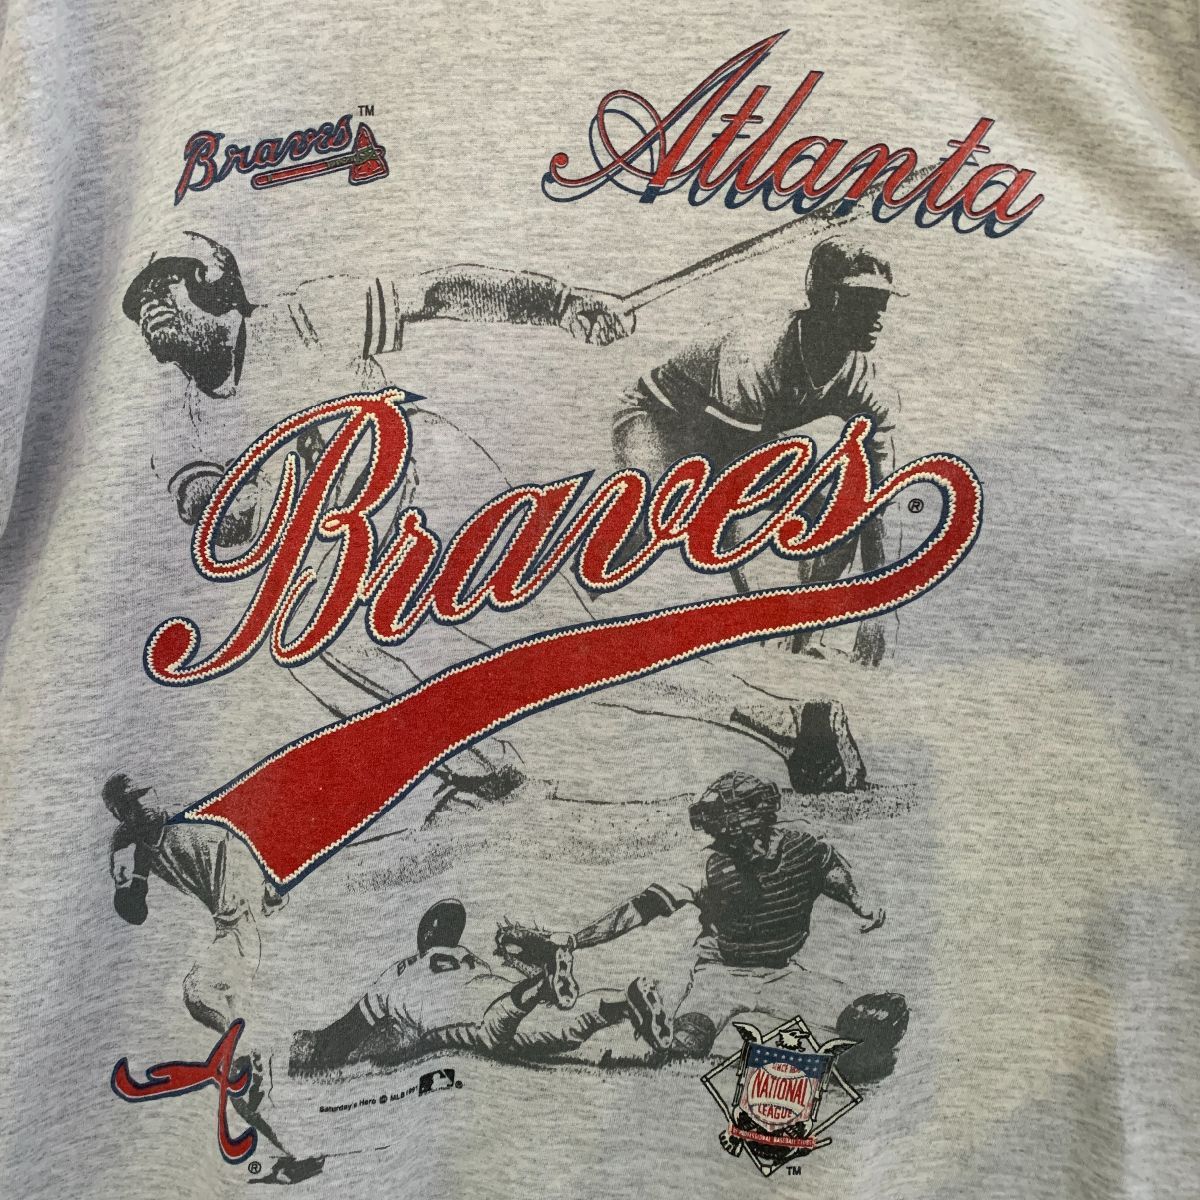 Vintage 90s Atlanta Braves Sweatshirt